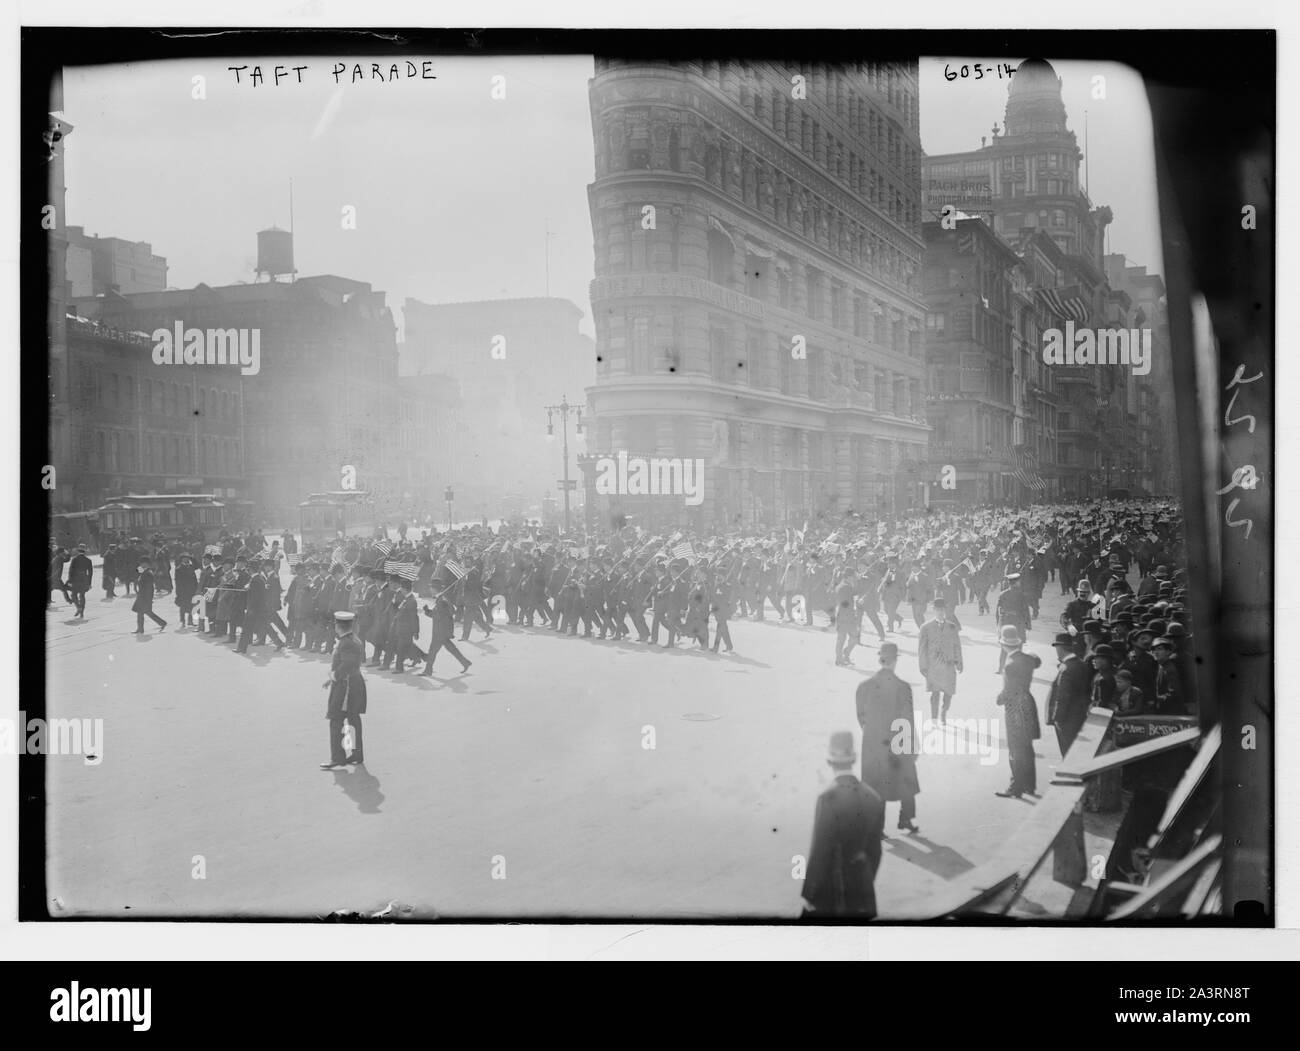 Taft Parade [New York] Stock Photo